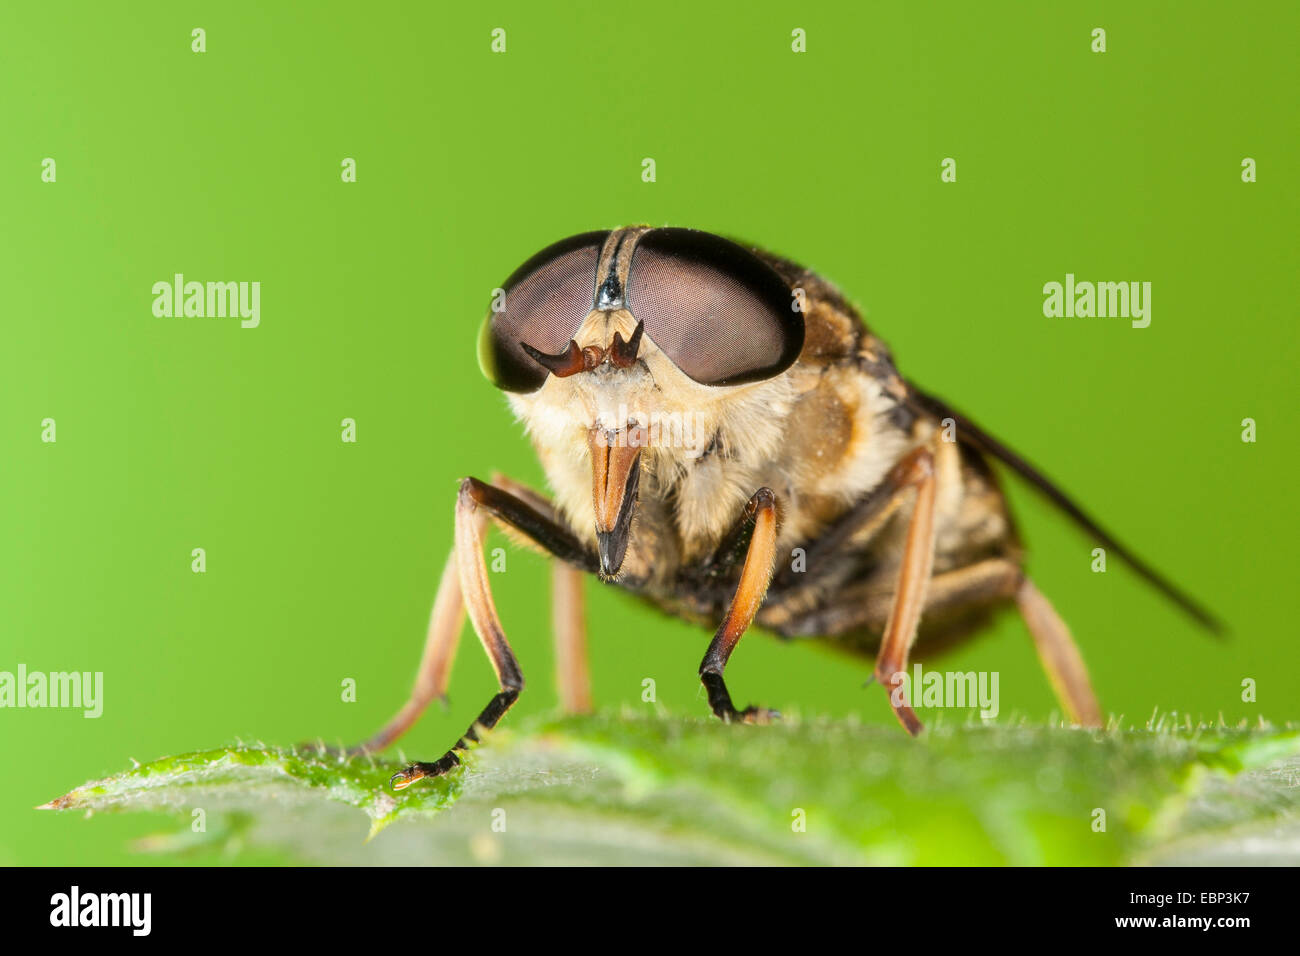 horsefly (Tabanus sudeticus), portrait with compound eyes and stinging mouthparts, Germany Stock Photo